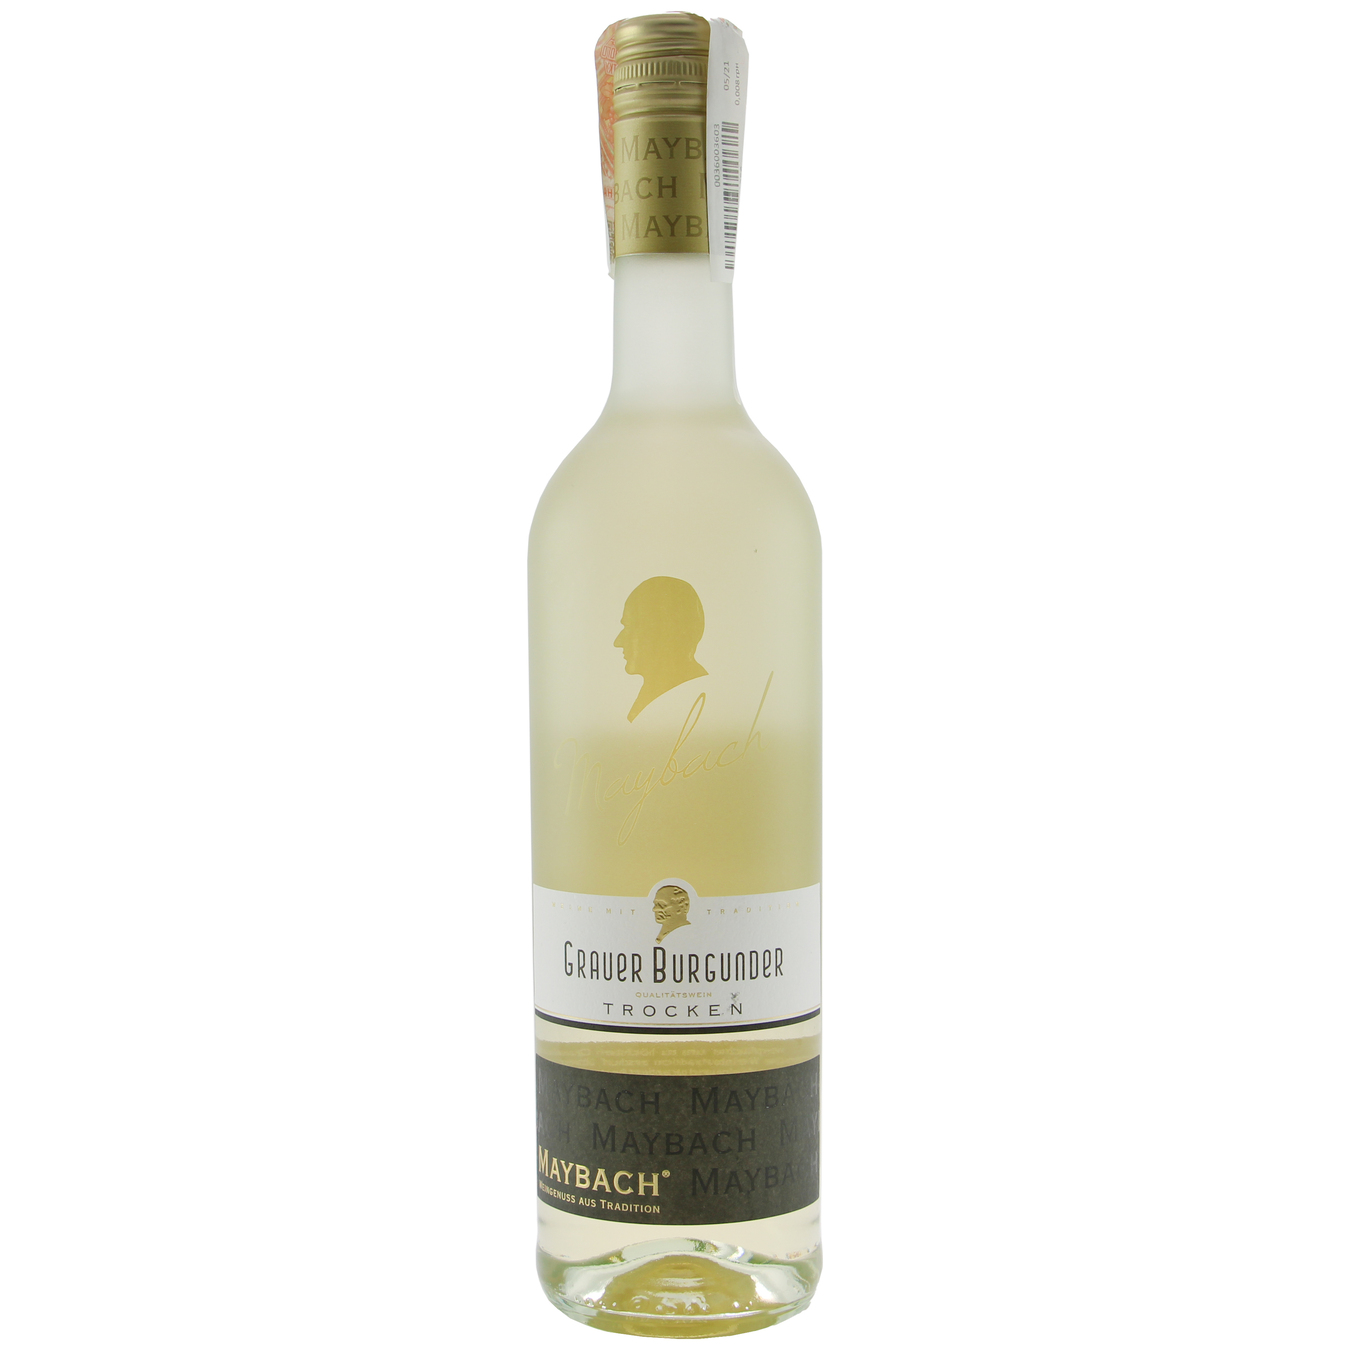 Вино Maybach Grauer Burgunder Trocken белое сухое 12% 0,75л